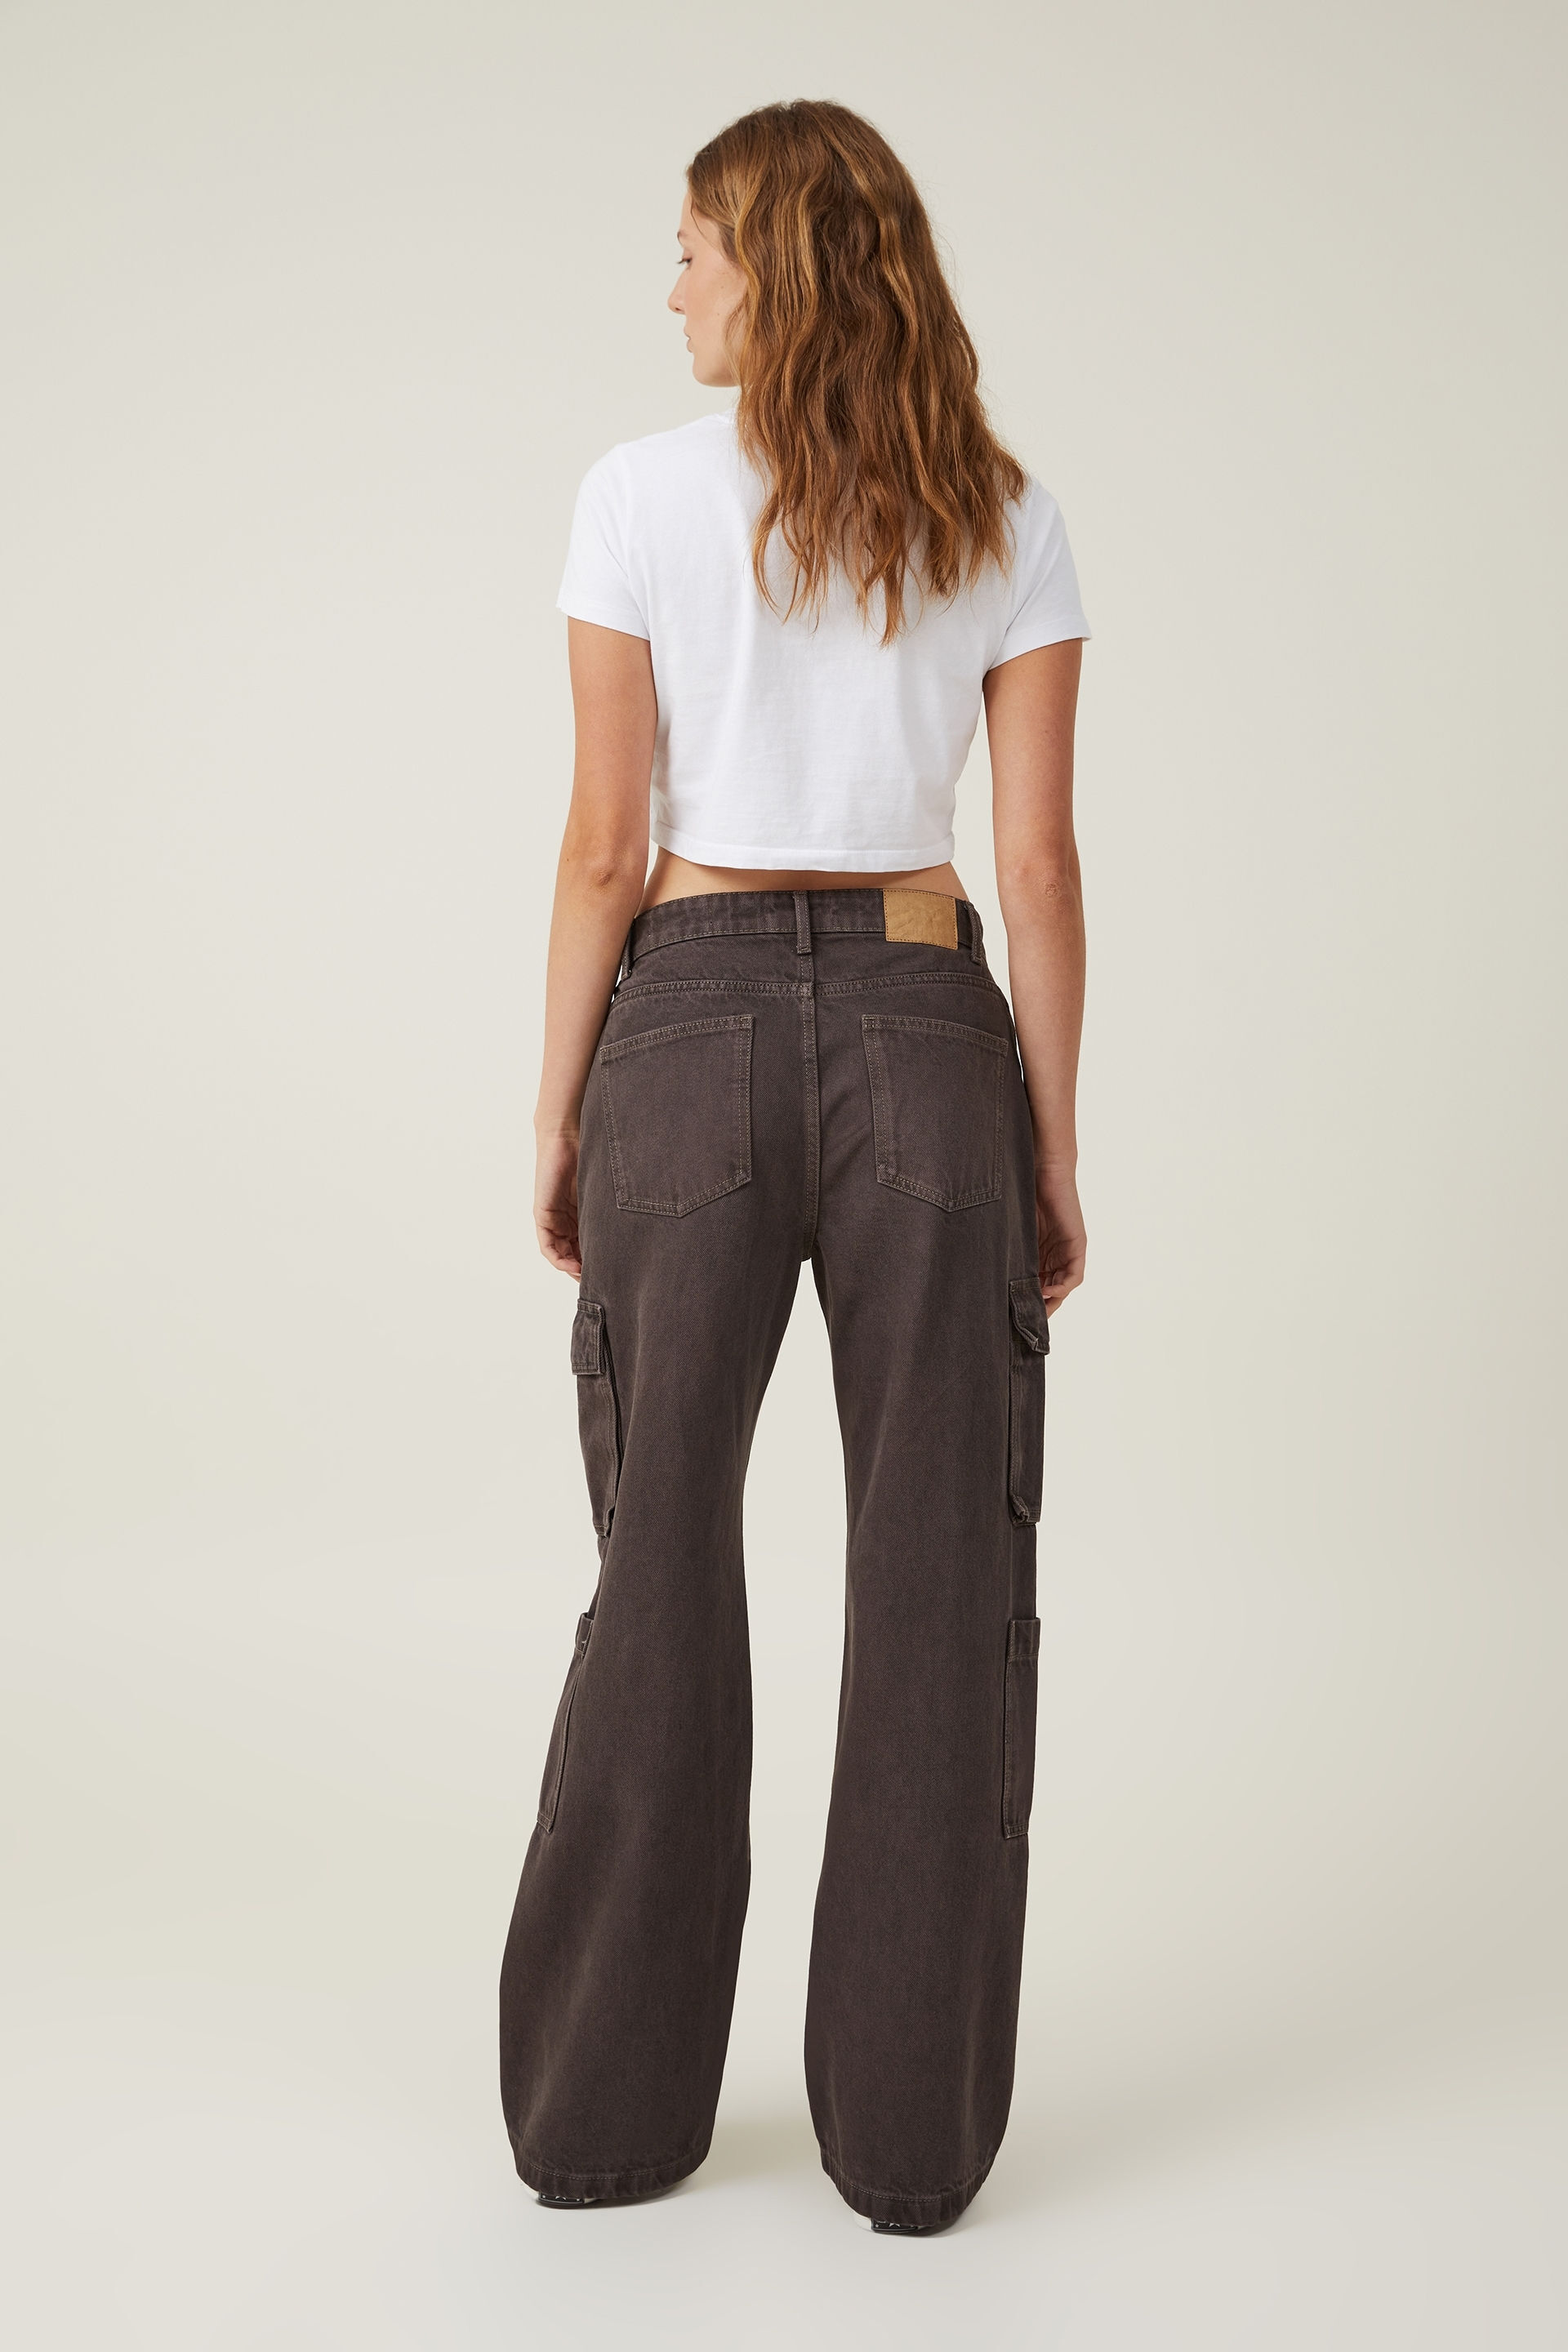 Women's Denim Jeans, Jackets, Skirts & Shorts | Cotton On Australia